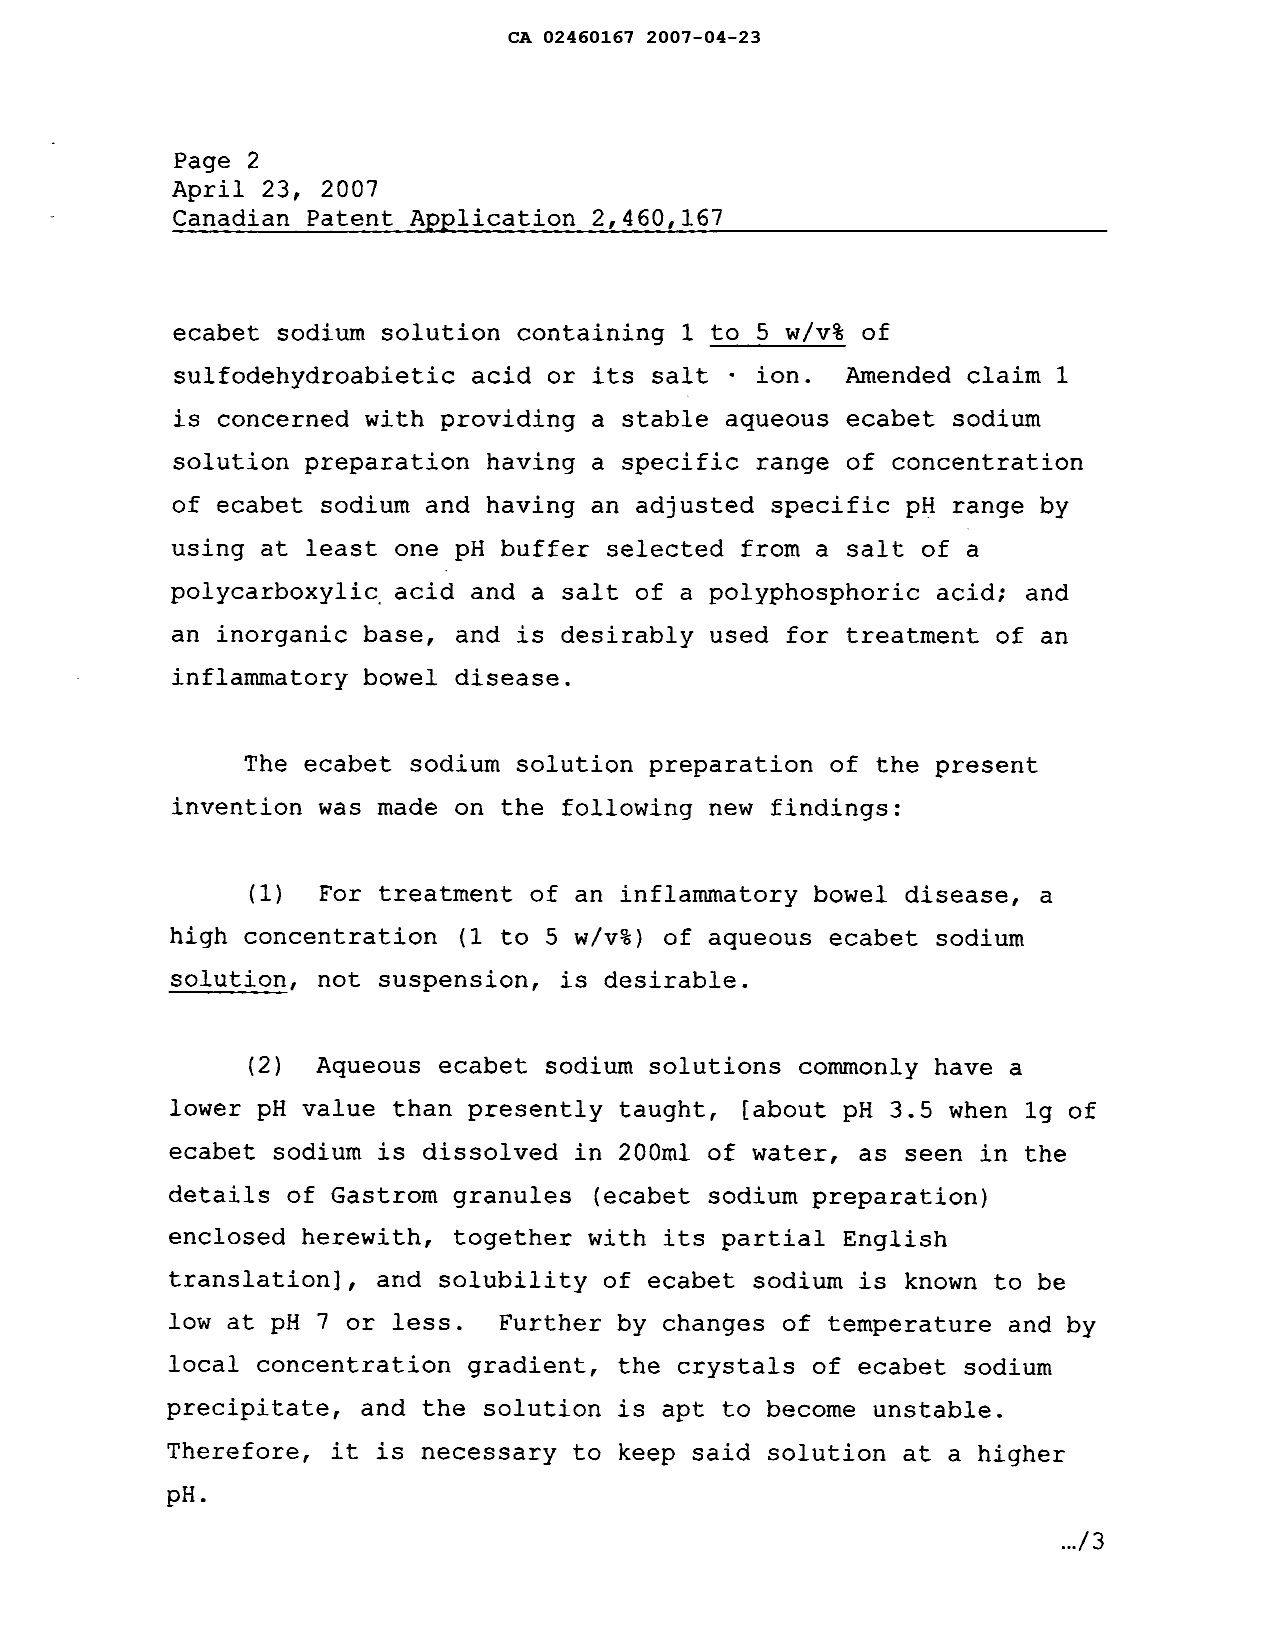 Canadian Patent Document 2460167. Prosecution-Amendment 20070423. Image 2 of 10